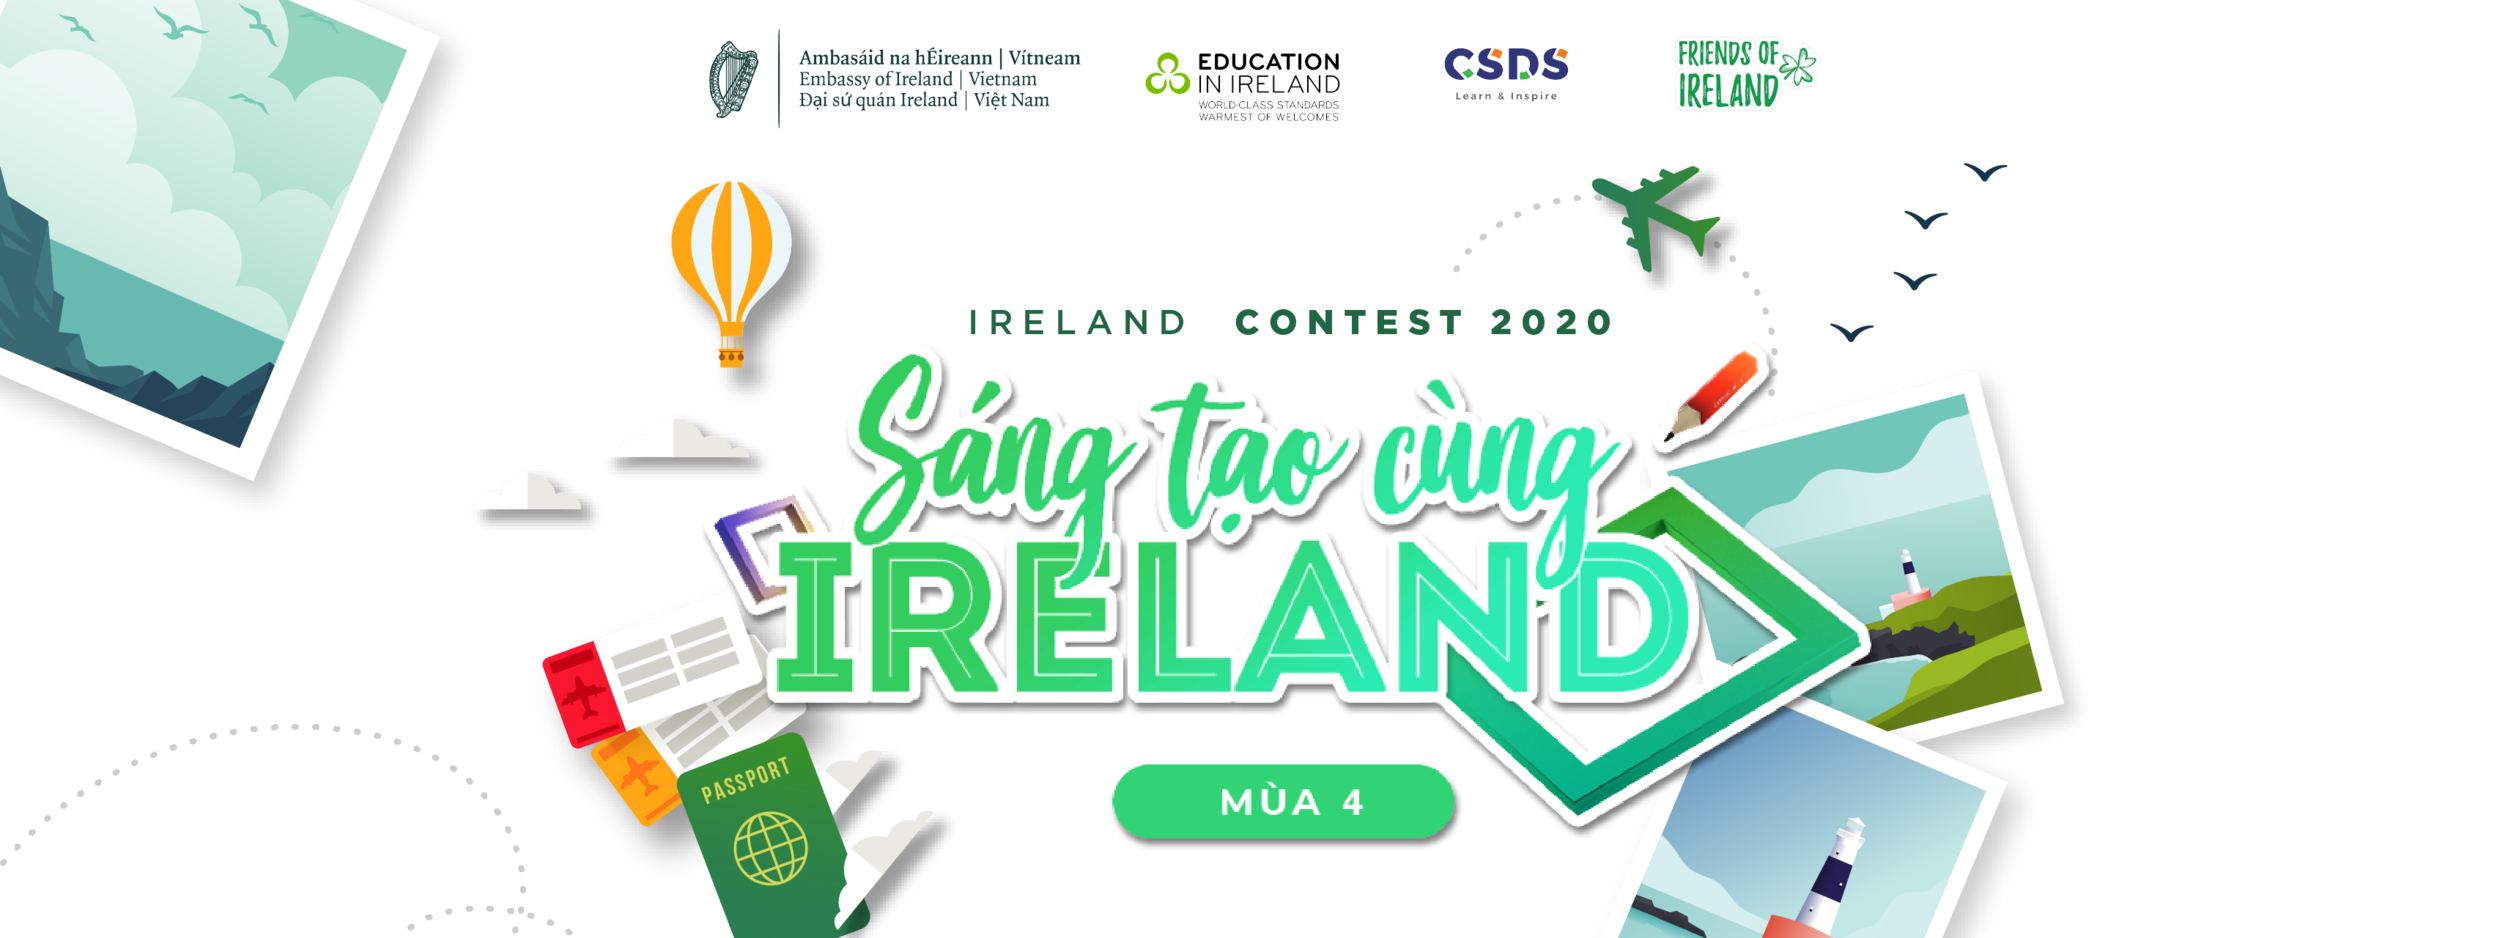 Cuộc thi sáng tạo cùng IRELAND – IRELAND CONTEST 2020